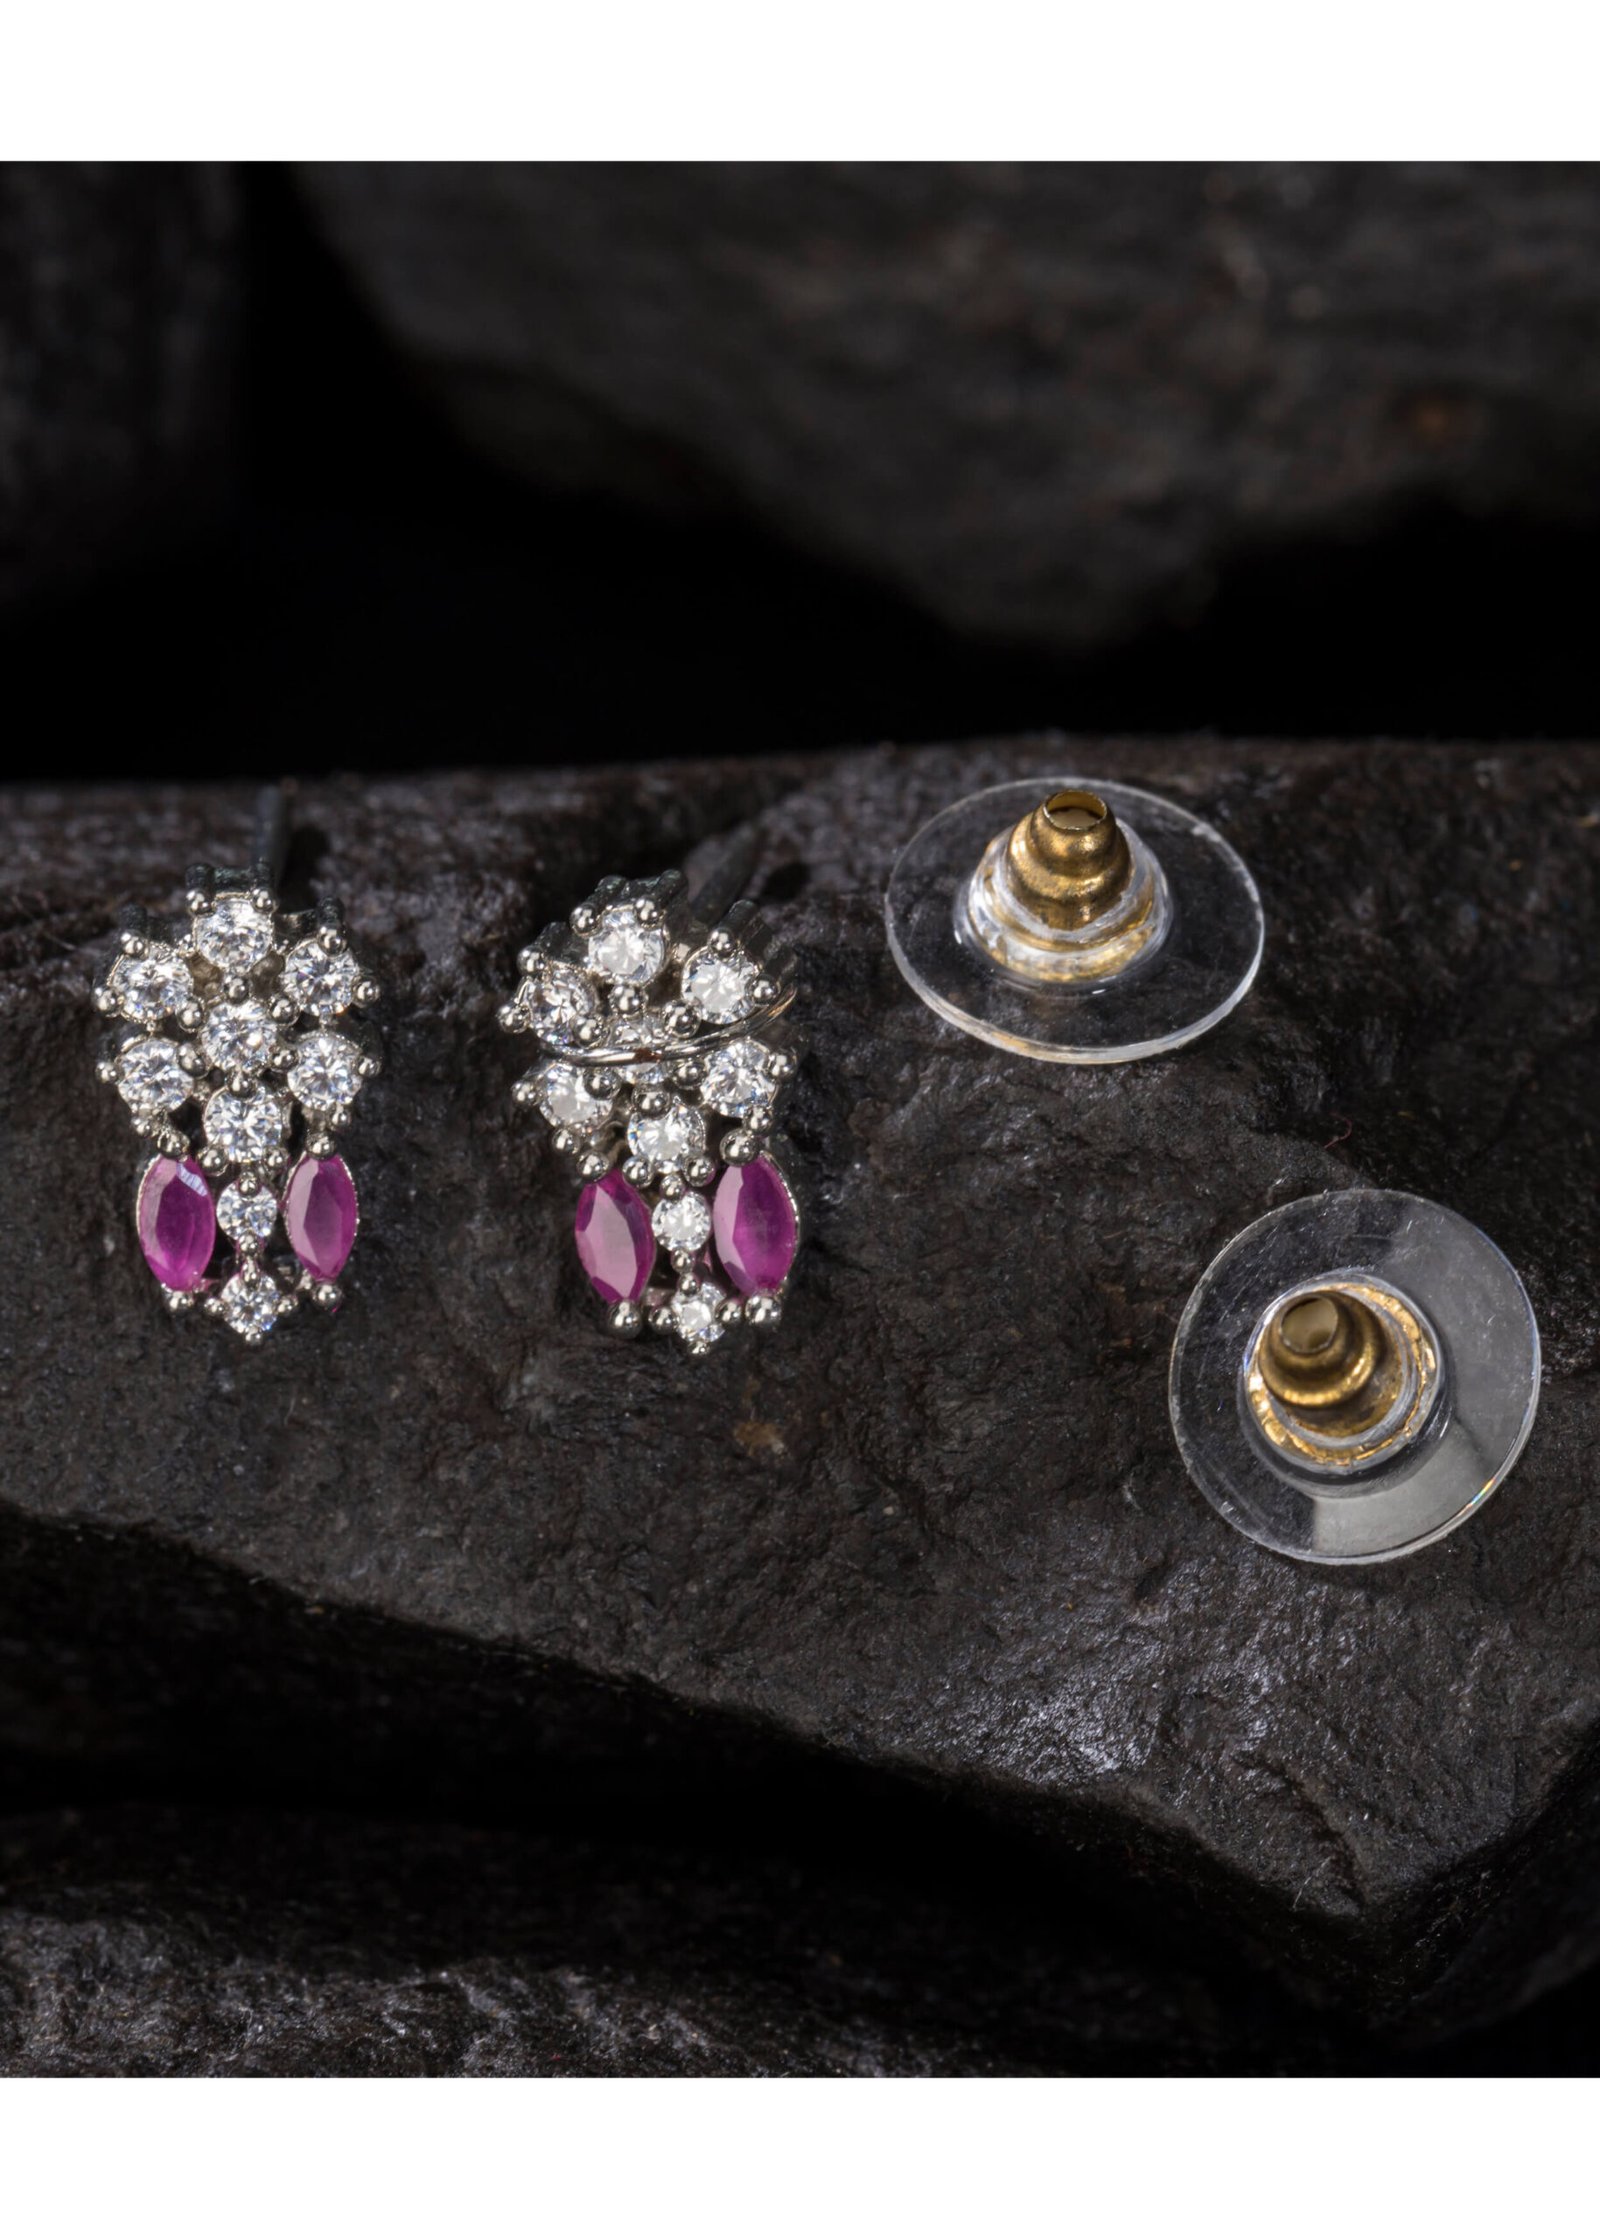 Buy Natural Ruby Earrings 4x3mm Pear Gemstone Sterling Silver Online in  India - Etsy [Video] [Video] | Wedding accessories jewelry, Ruby earrings,  Stud earrings unique